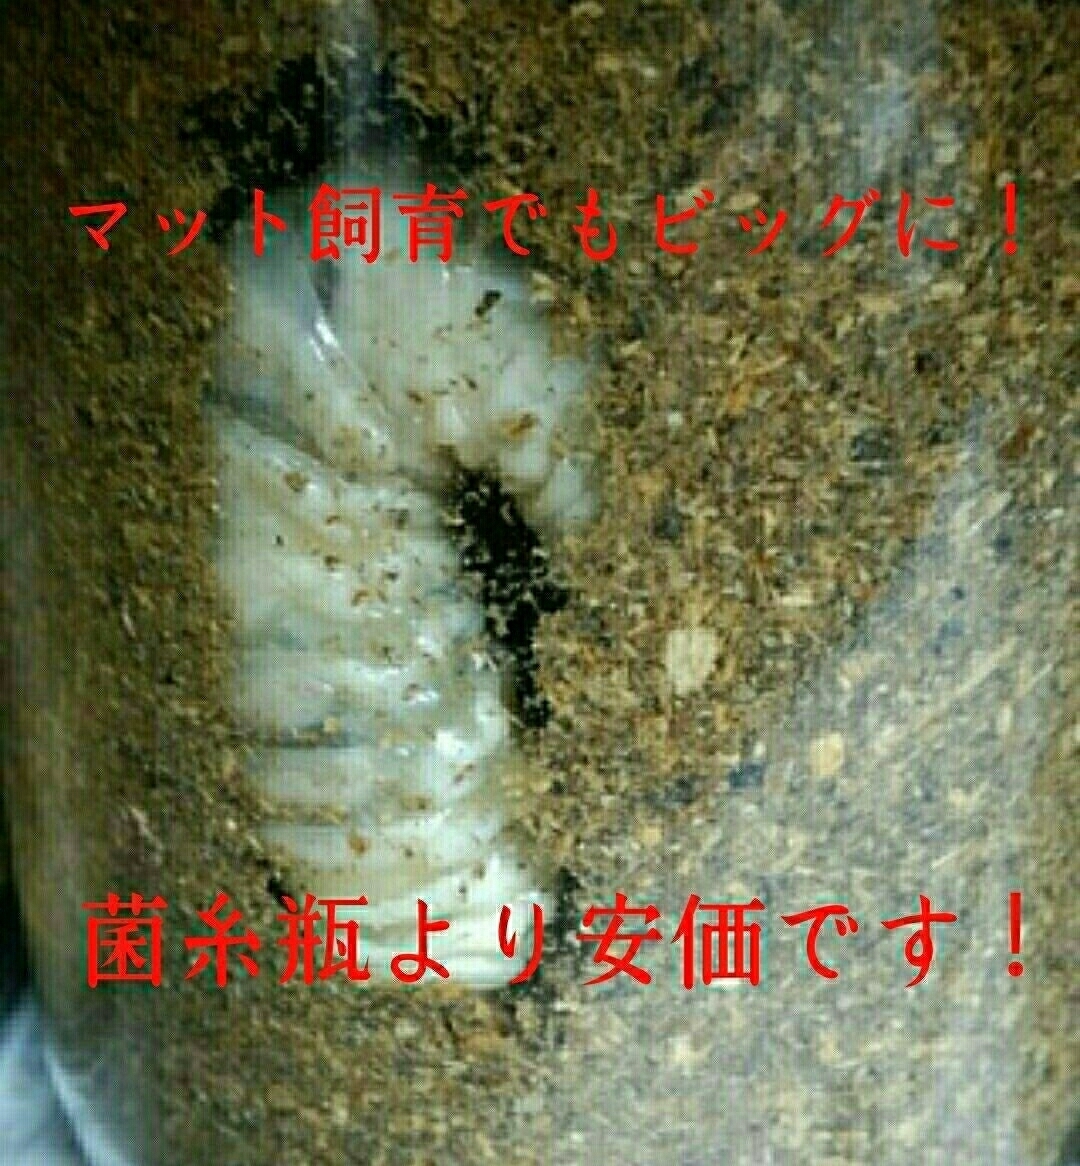  Miyama stag beetle . Prosopocoilus inclinatus . big size becomes!himalaya common .. departure . mat! nutrition cost eminent! larva. bait, production egg mat also highest!